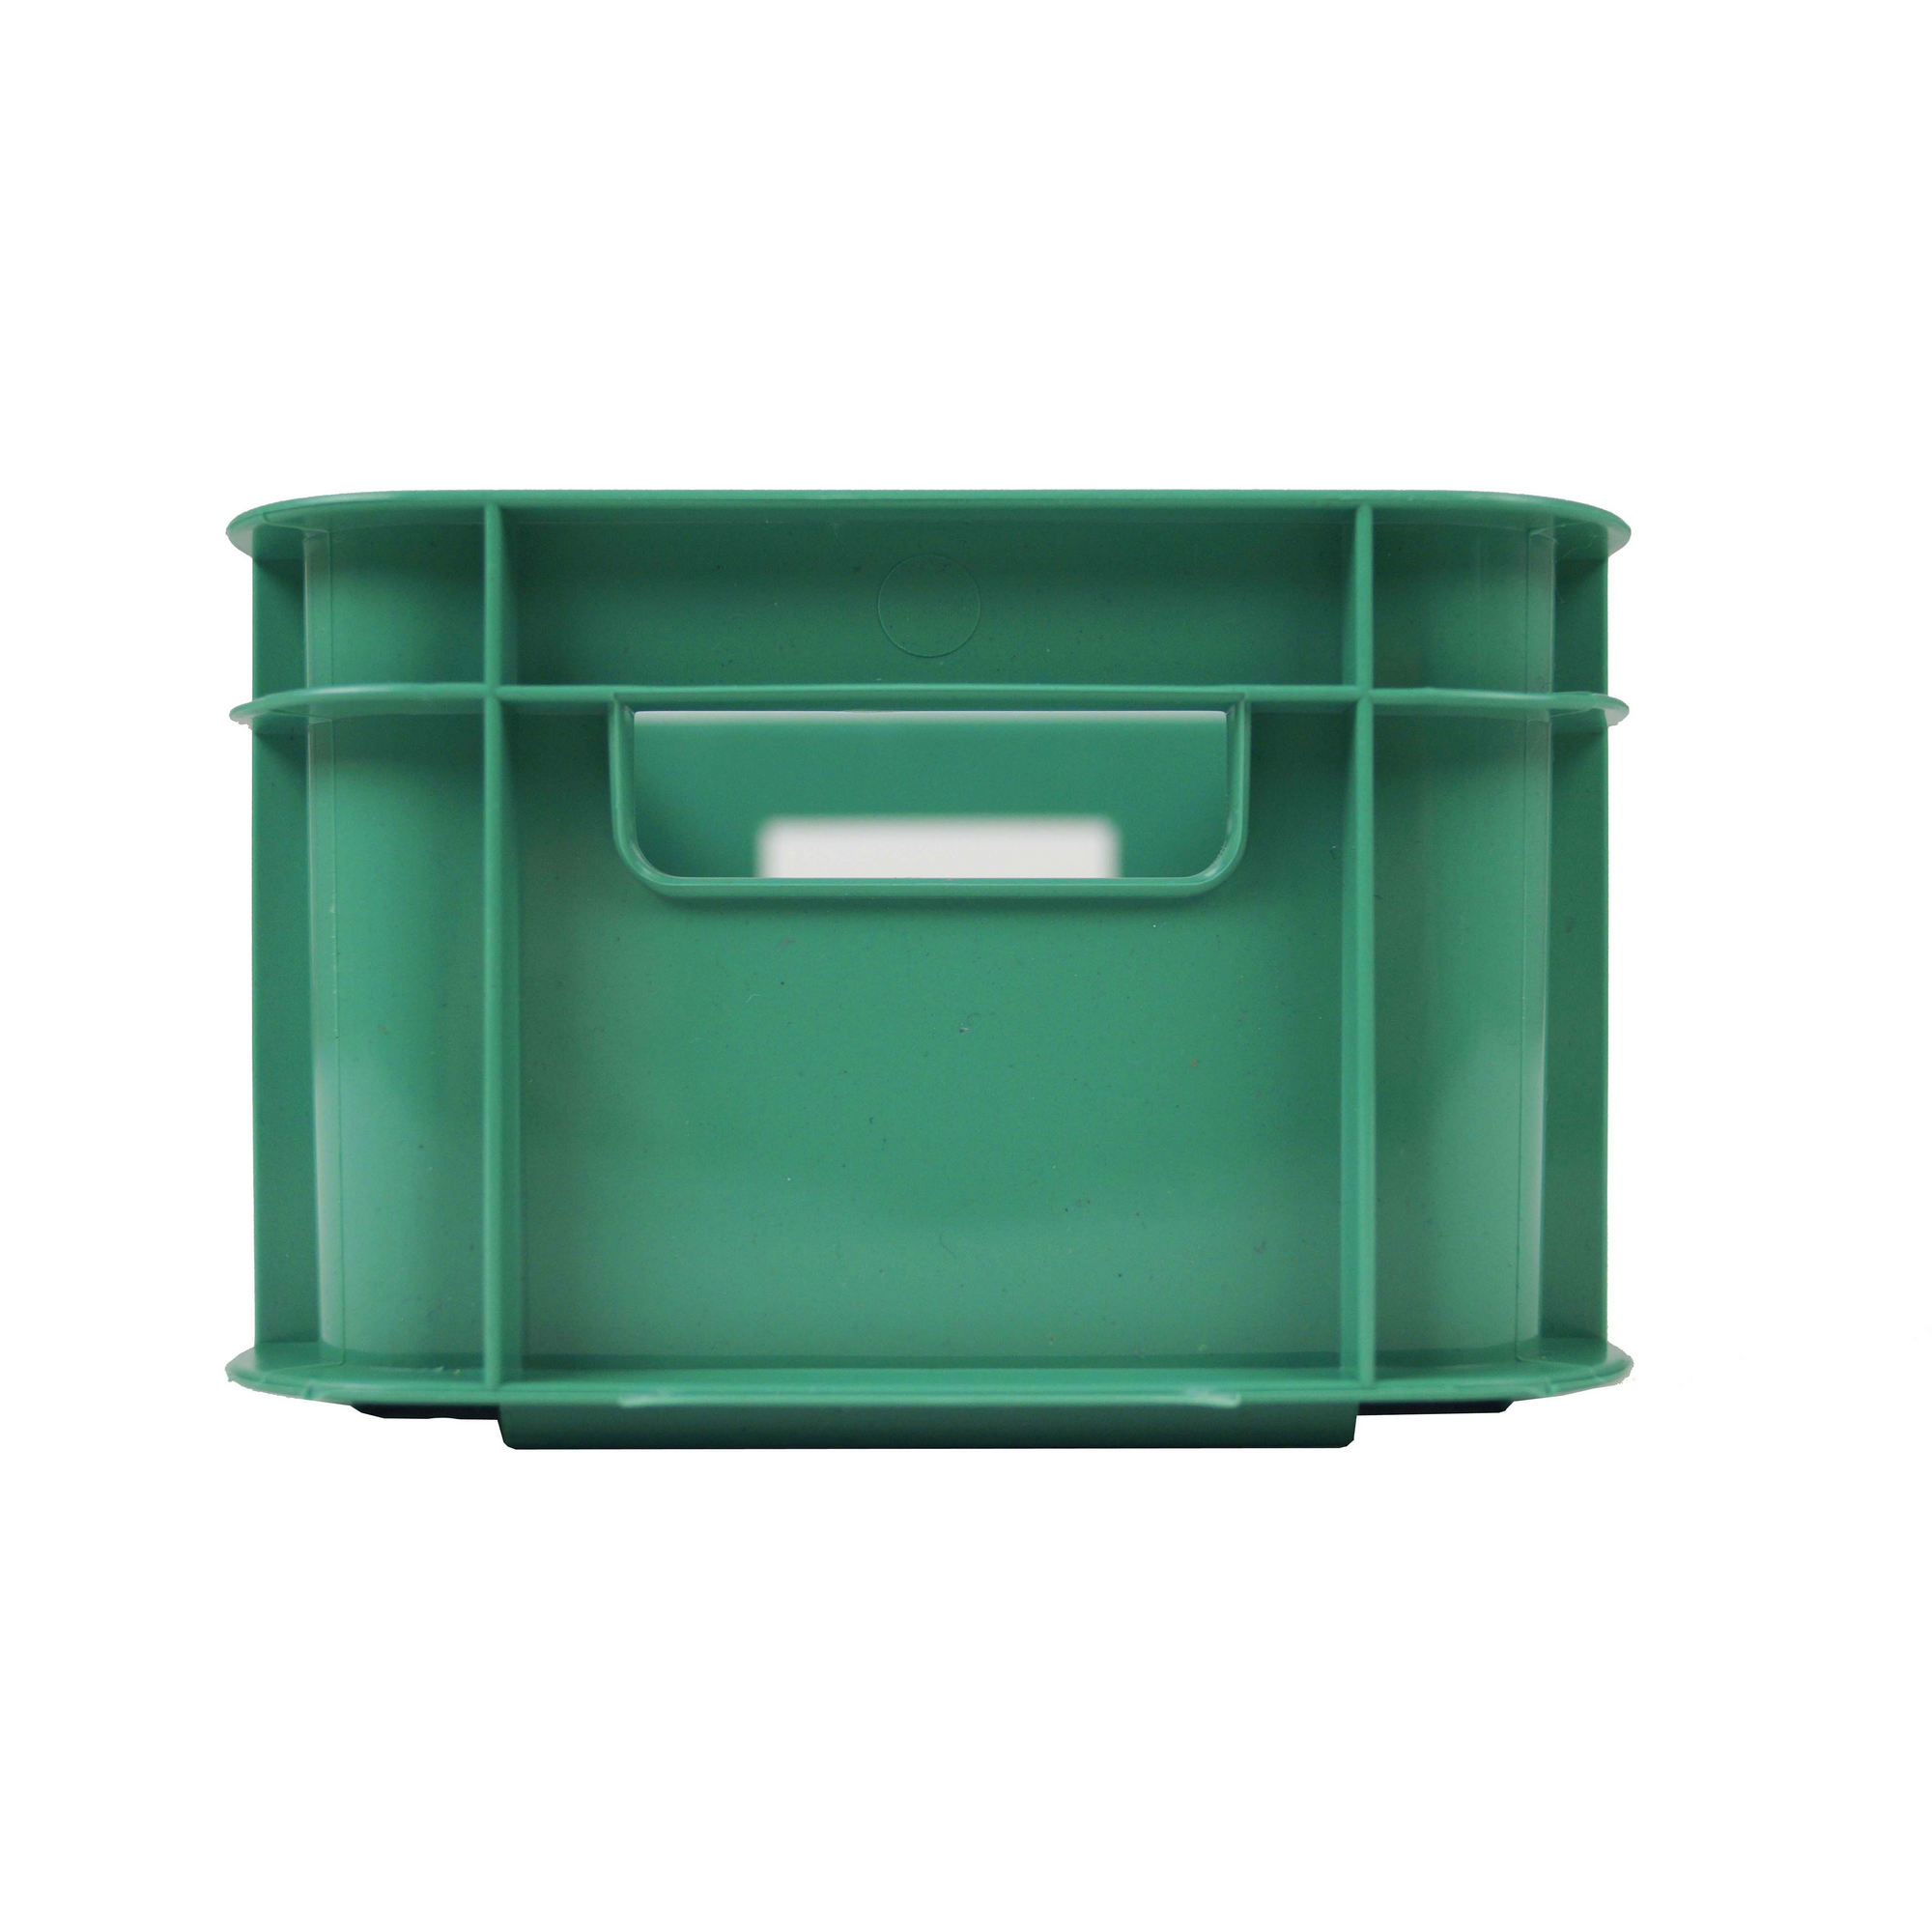 Aufbewahrungsbox 'Baby-Box' grün 24 x 17 x 17 cm, 3,5 l + product picture